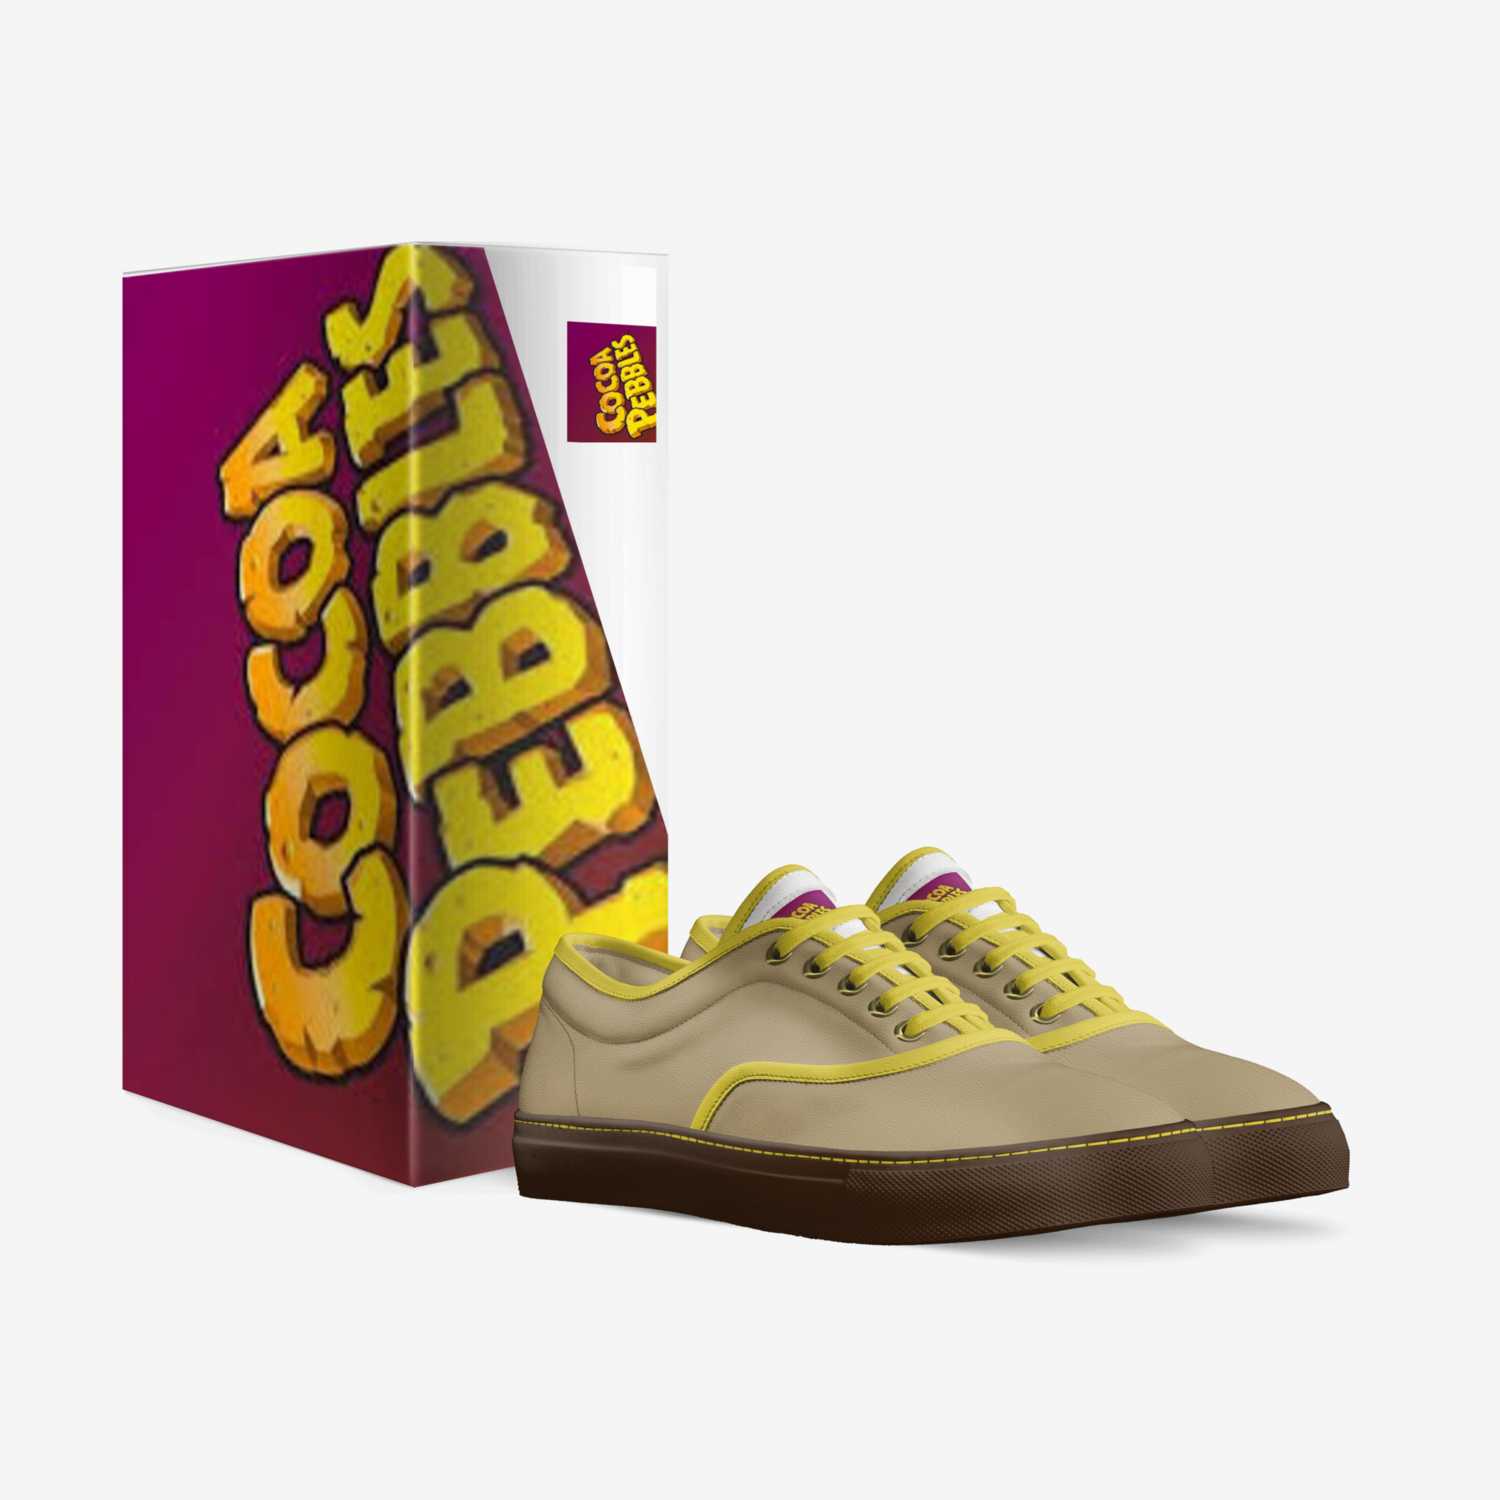 coco pebbles custom made in Italy shoes by Tarzavian Harvin | Box view